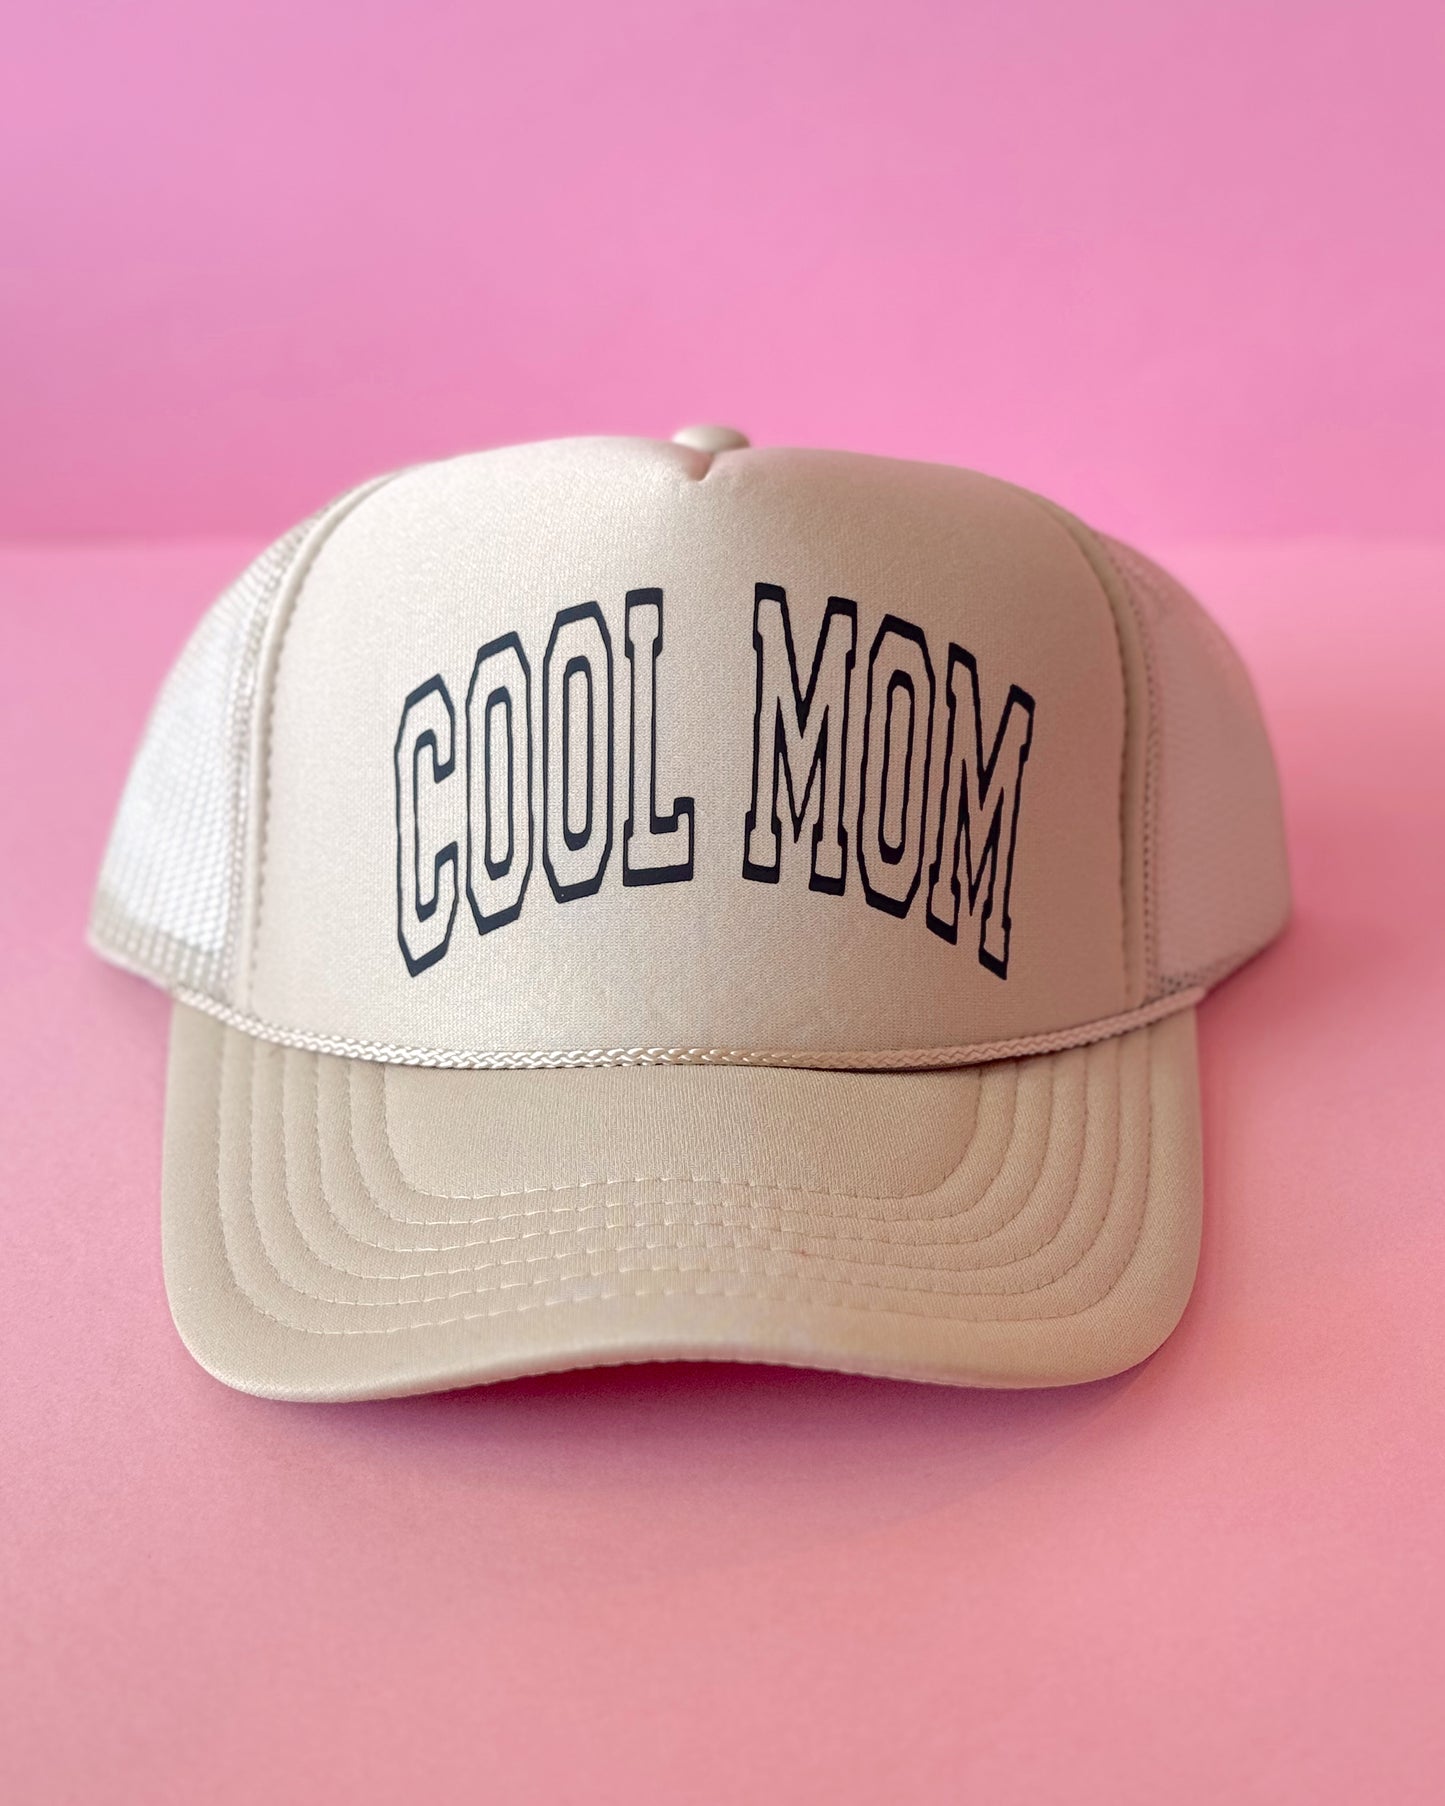 Cool Mom Trucker Hat